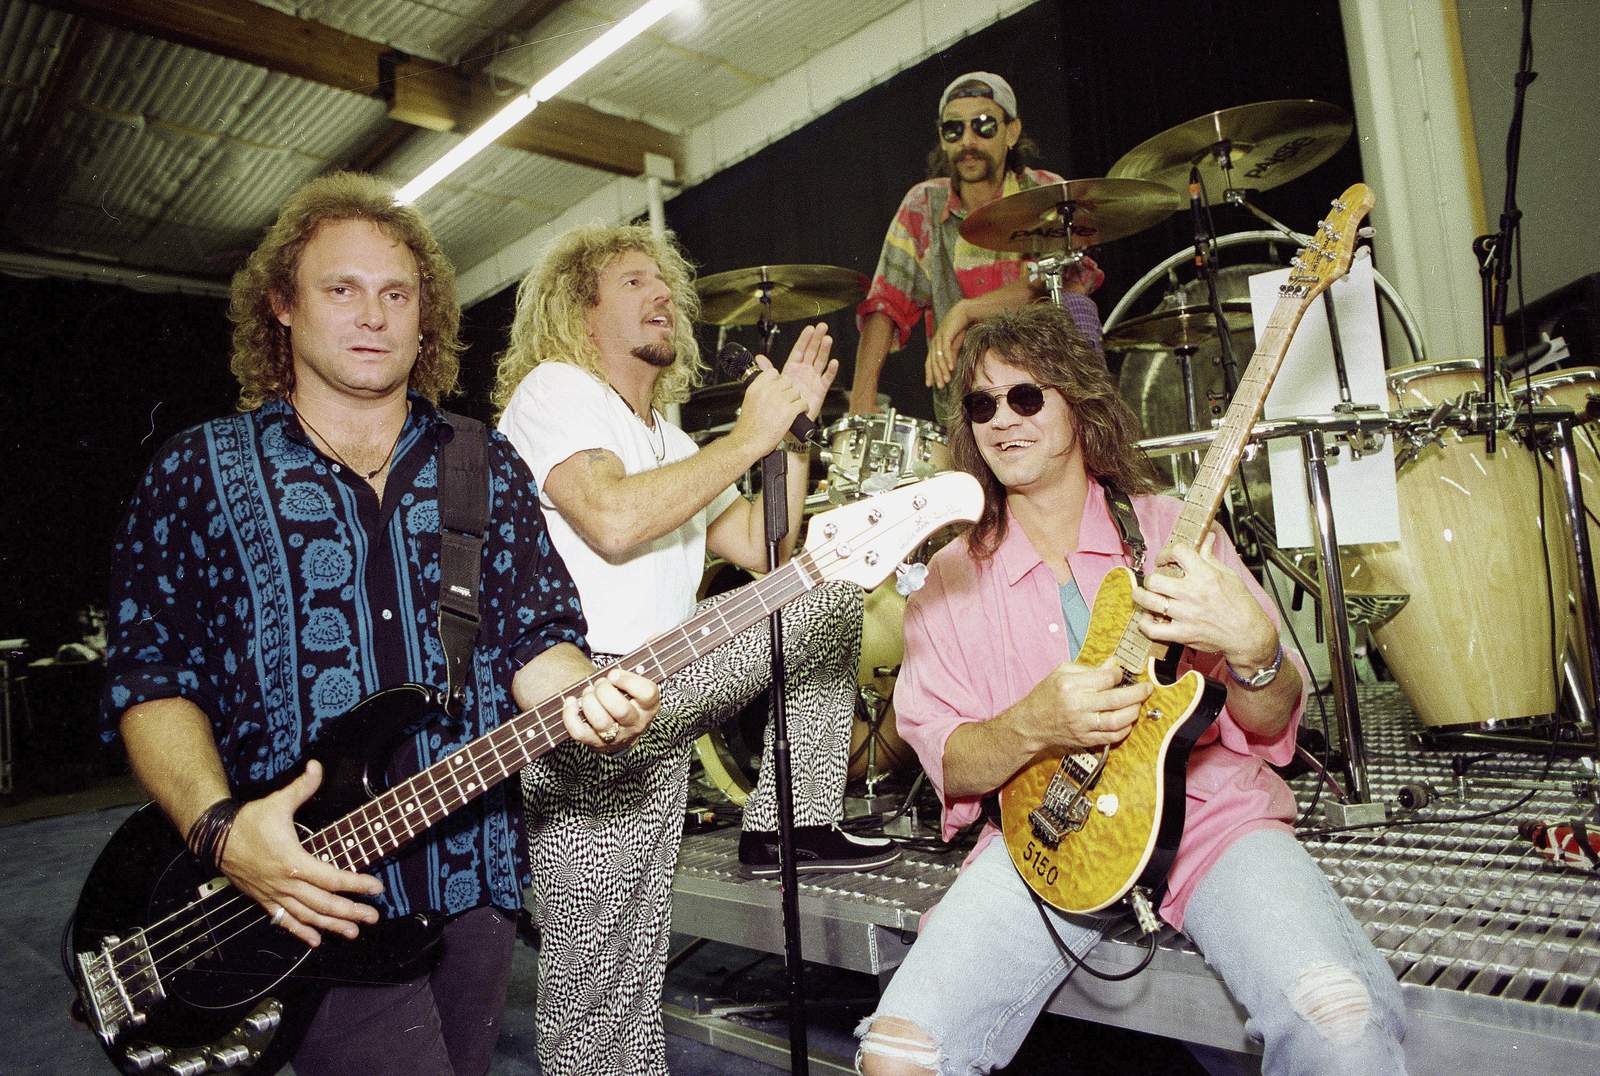 Guitar rock god Eddie Van Halen dies of cancer at 65